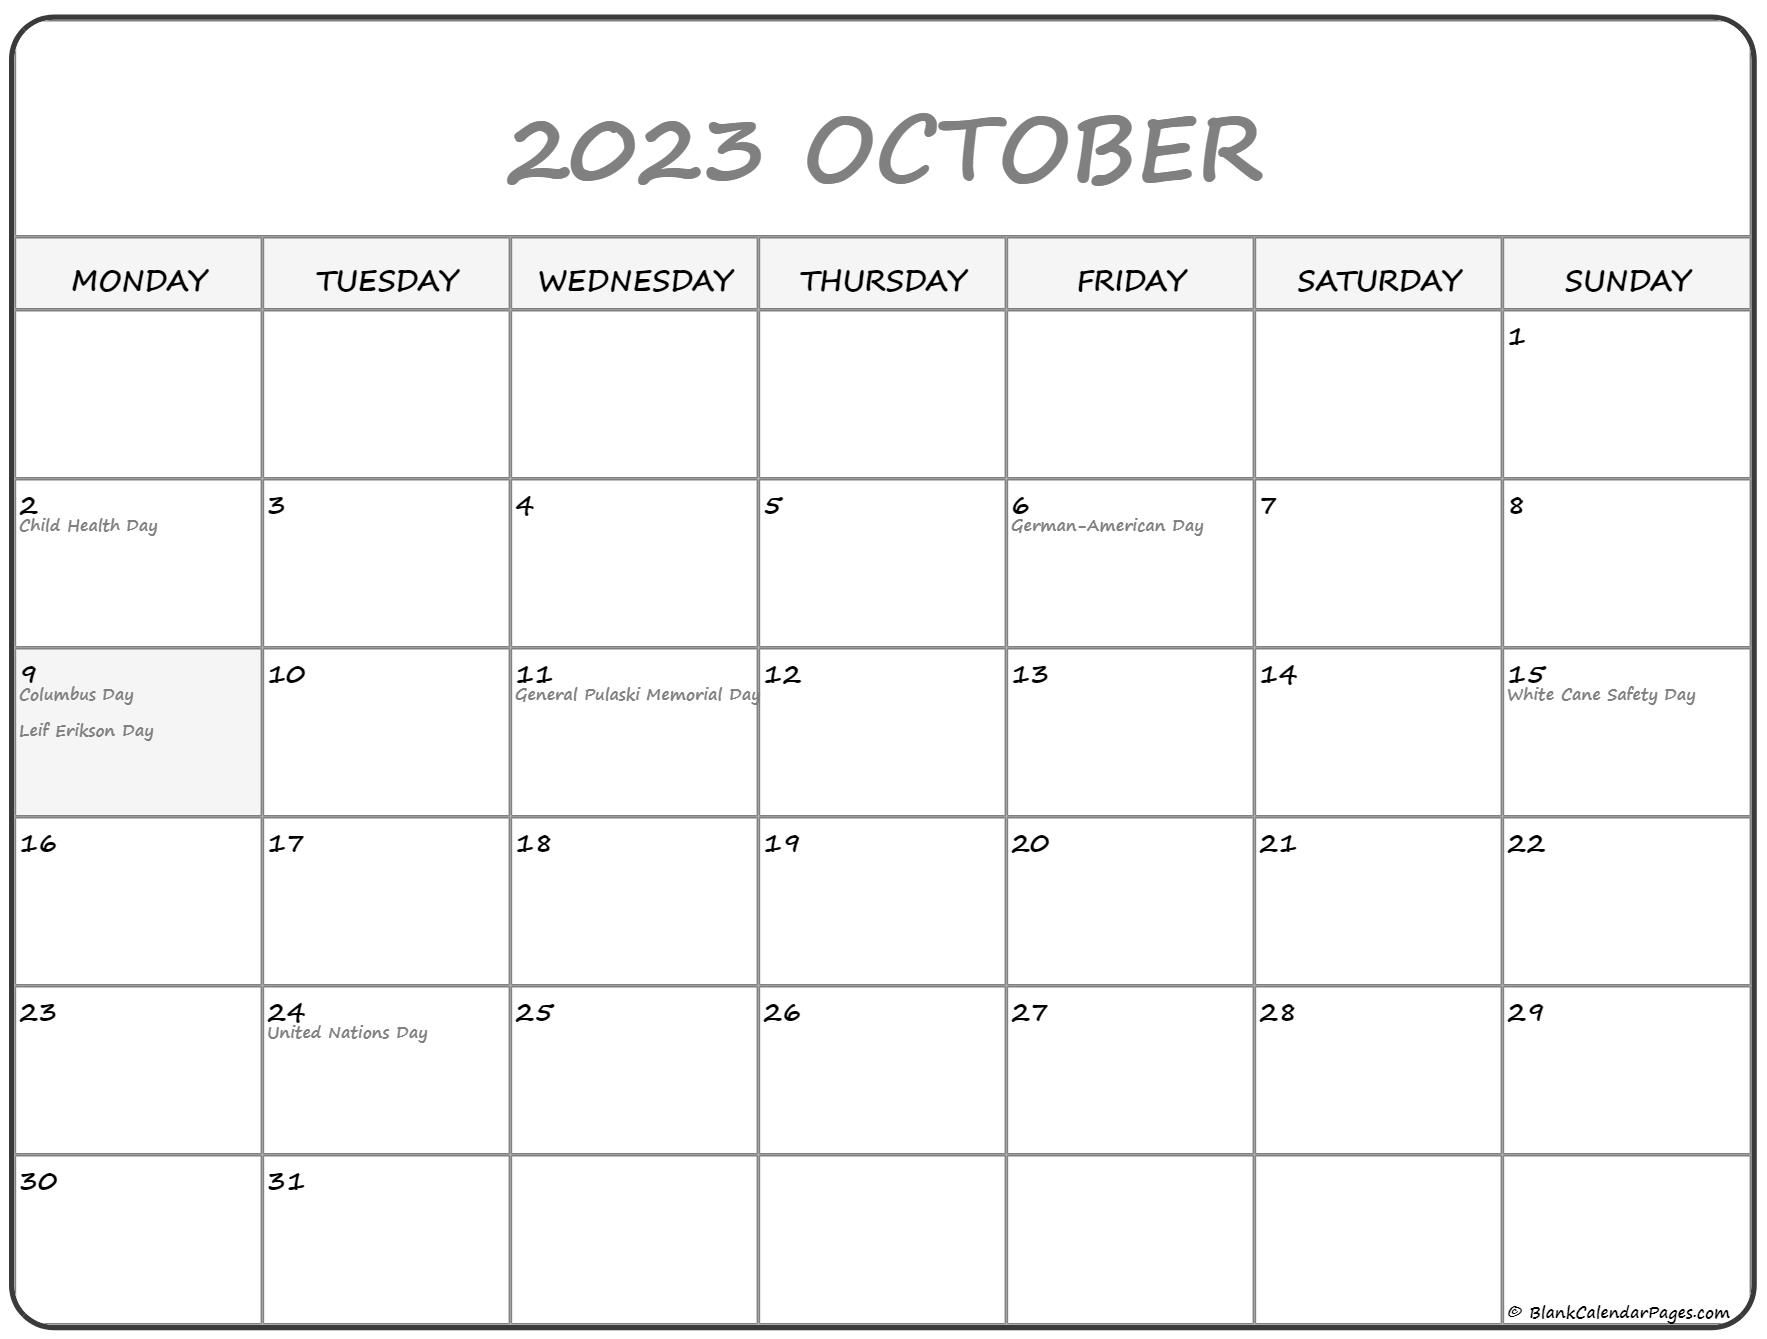 October 2023 Monday Calendar Monday To Sunday